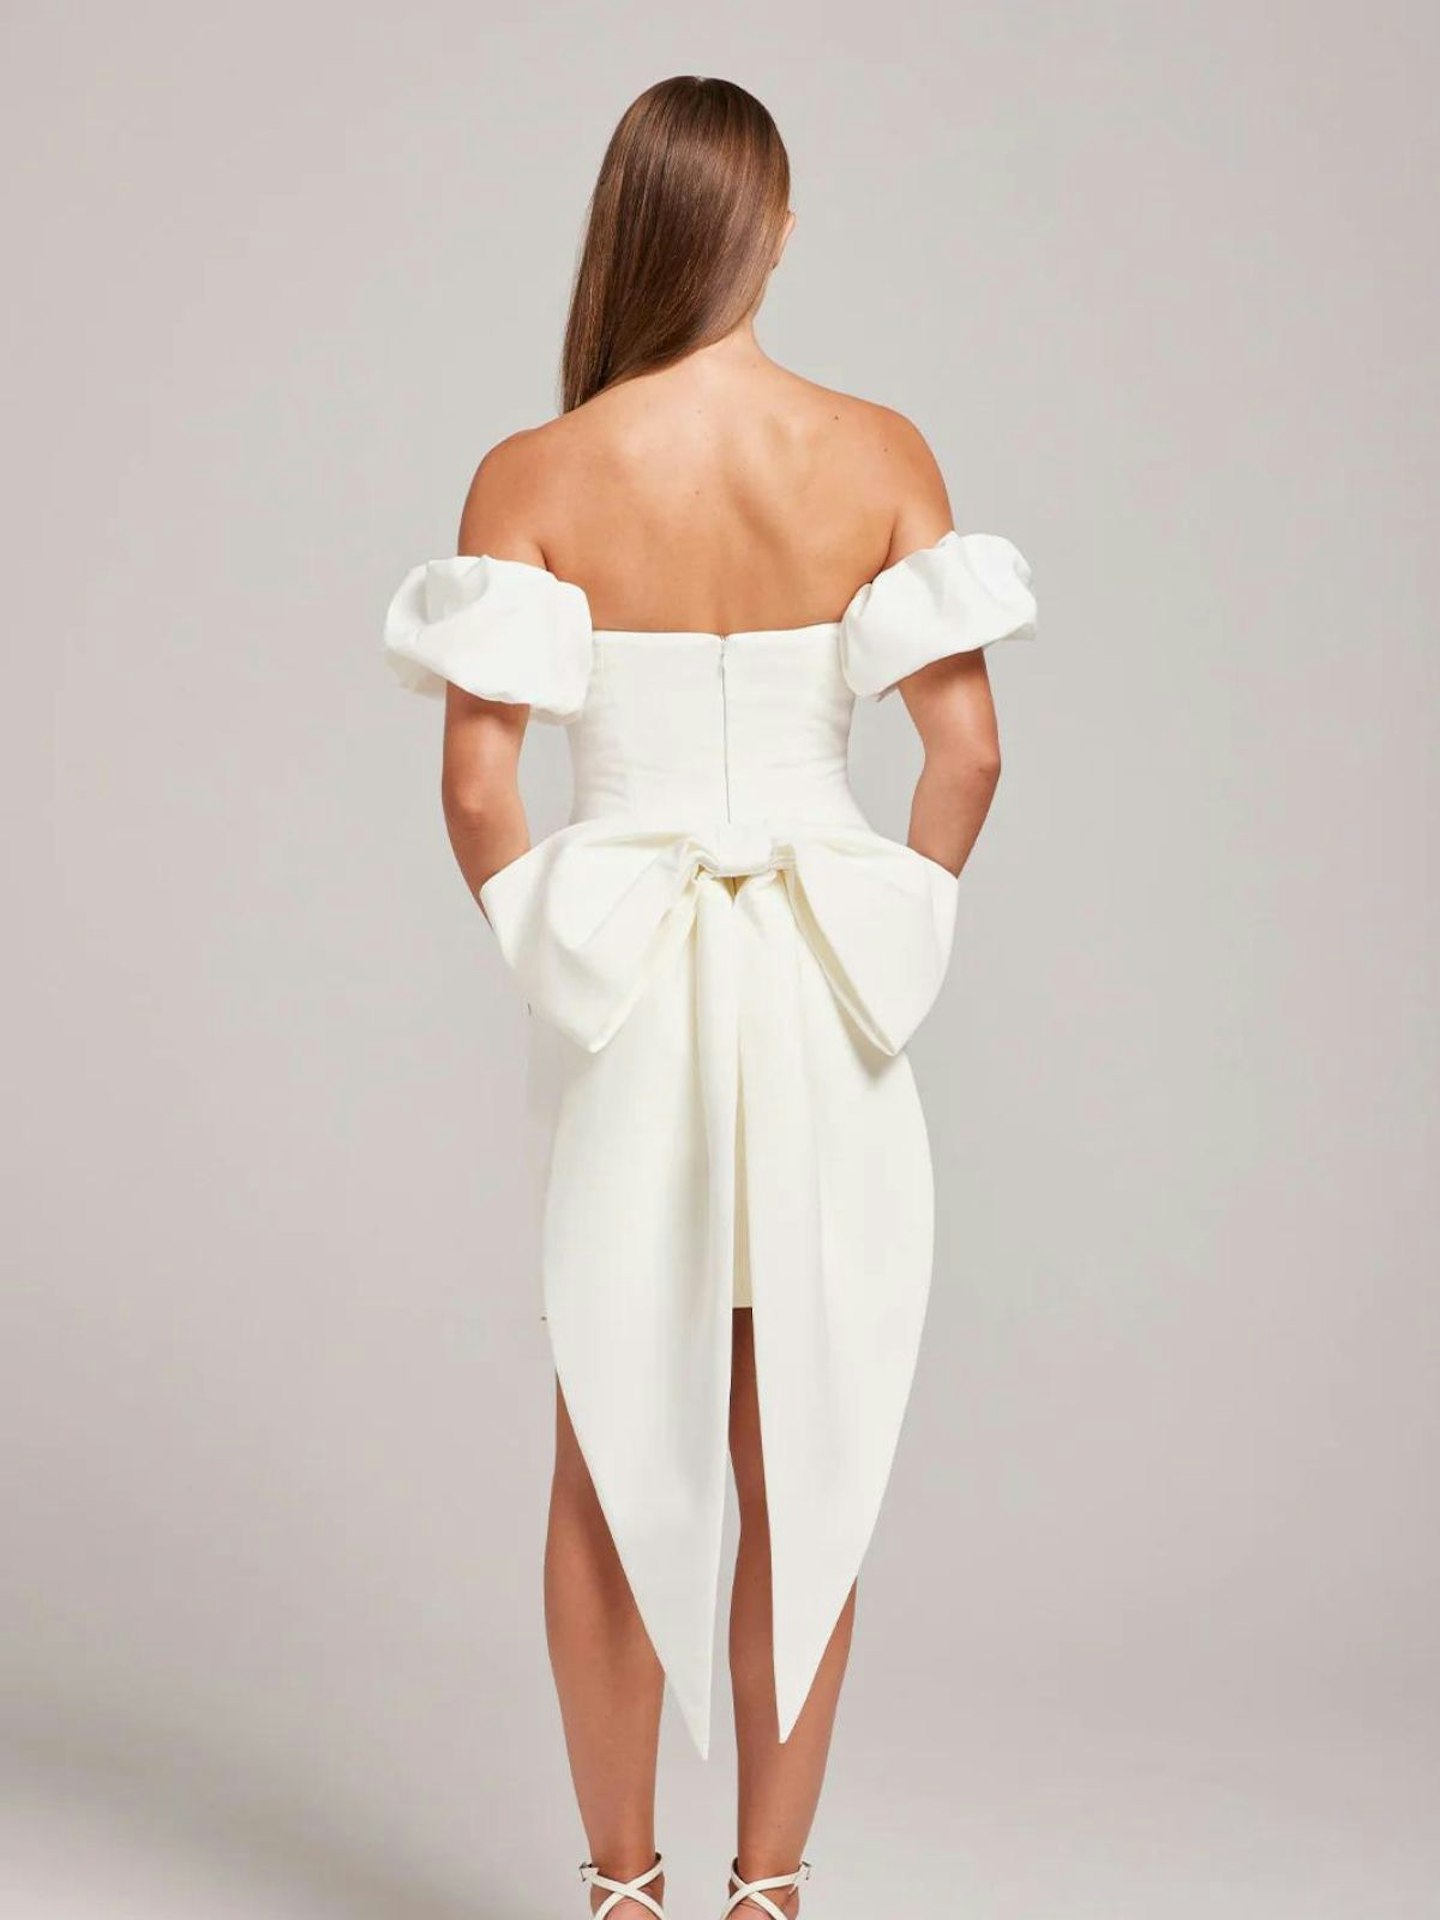 Nadine Merabi Emiliee White Dress